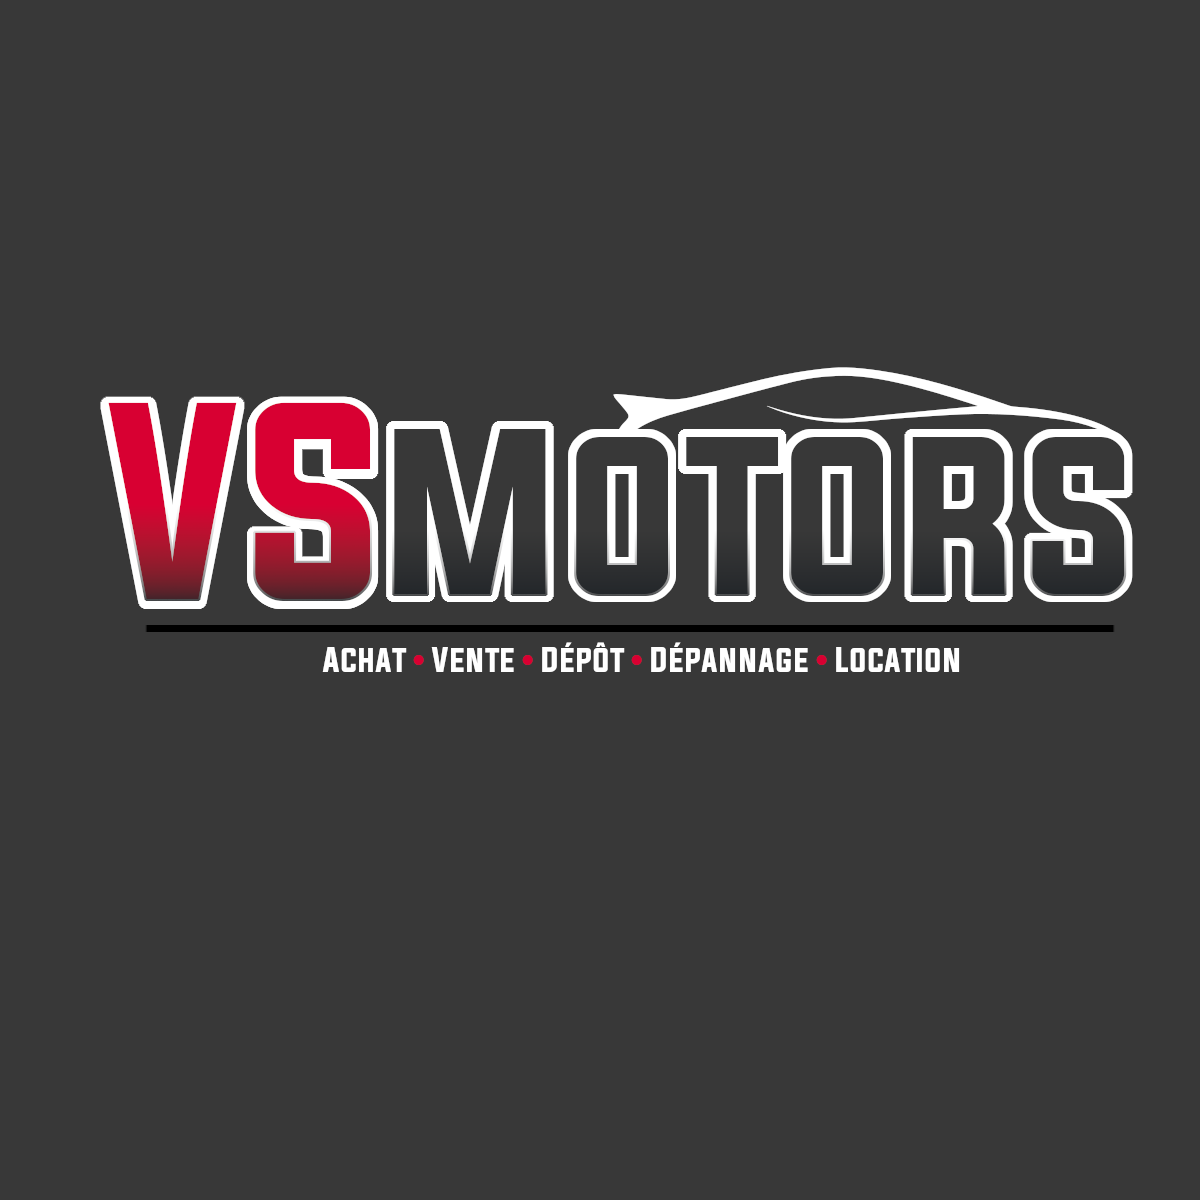 vsmotors logo wapi web